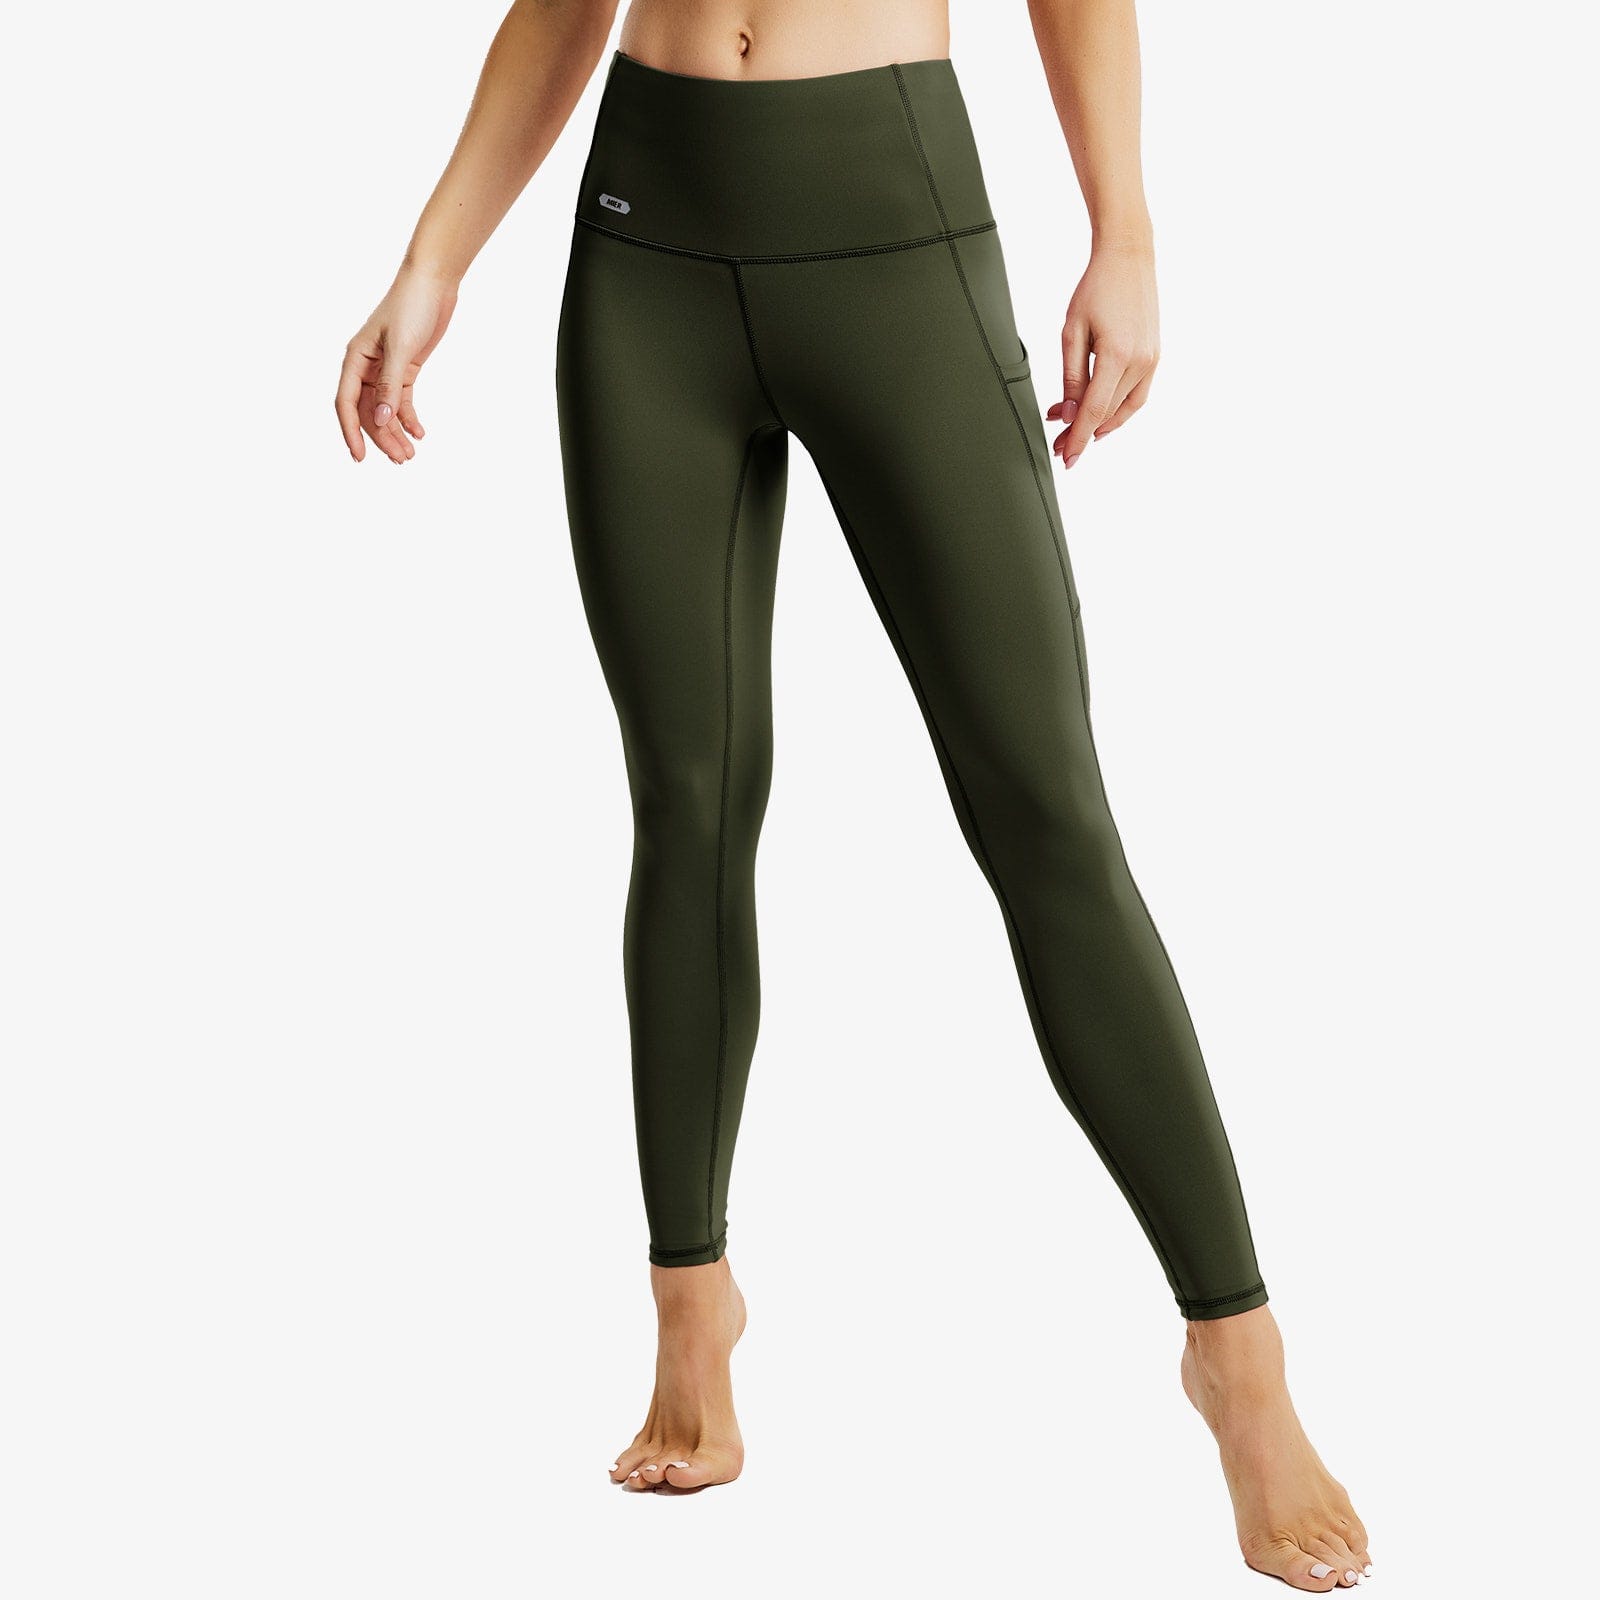 Women's High Waist Yoga Pants with Pockets, Full Length Women Yoga Pants Deep Green / S MIER